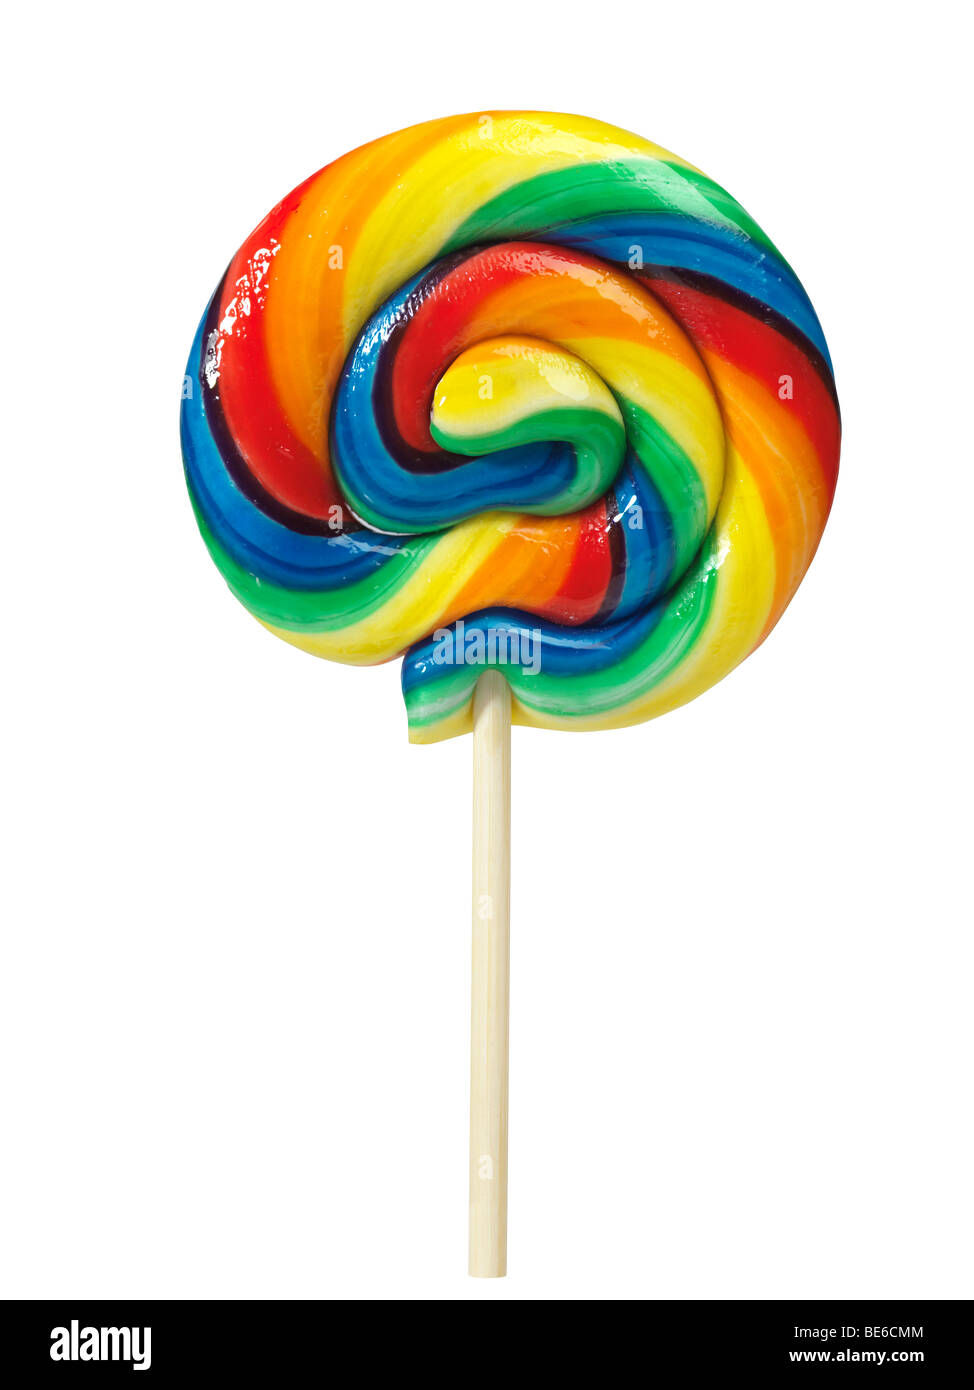 Colorful appetizing lollipop Stock Photo